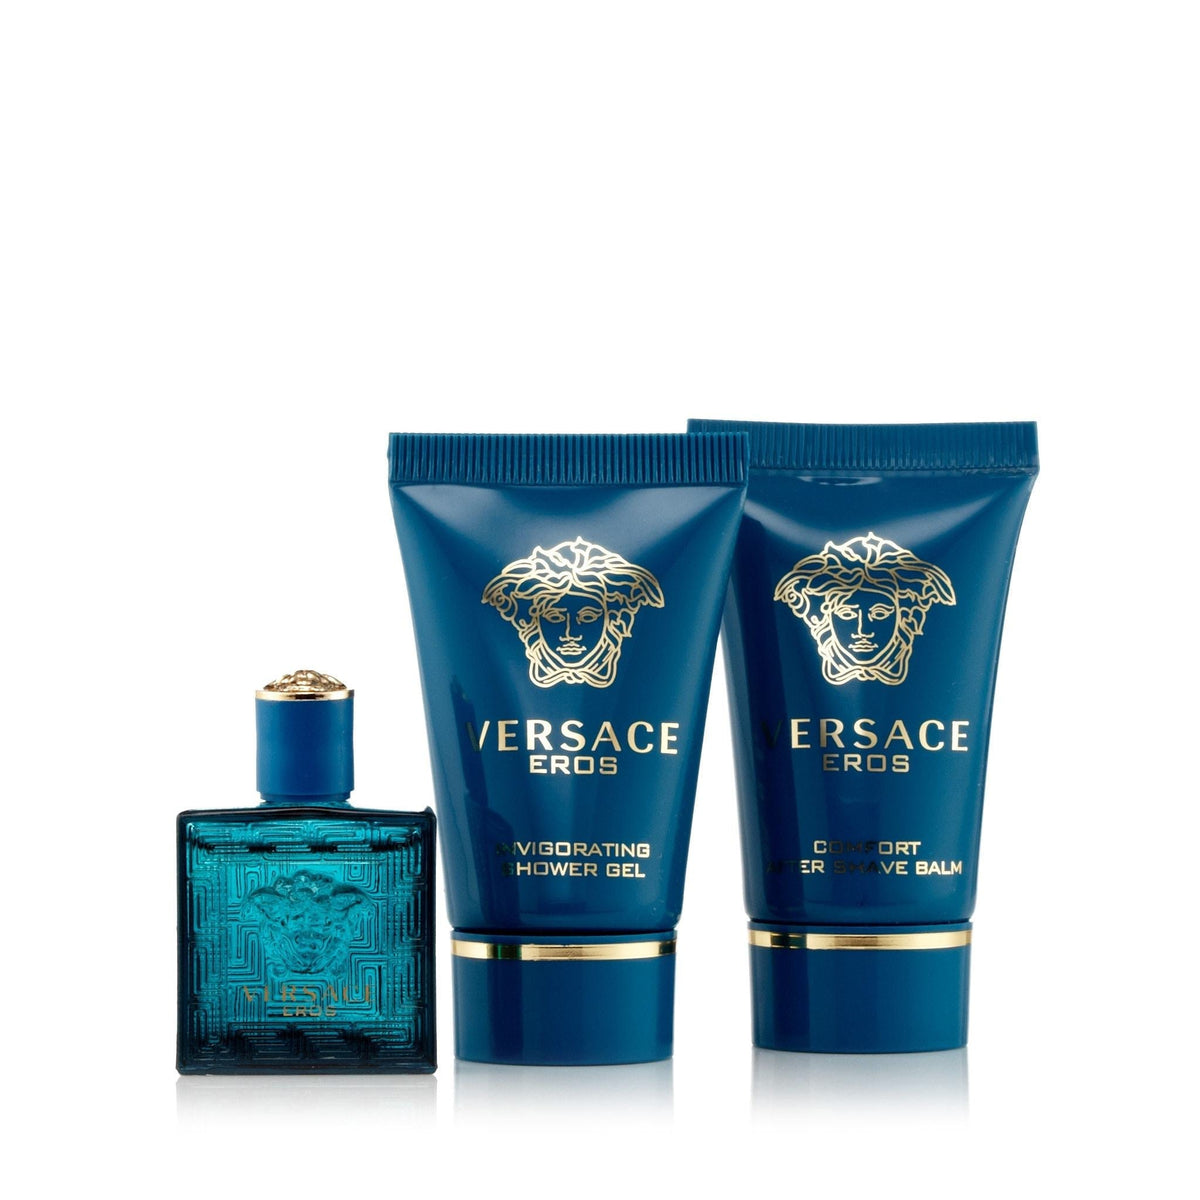 Versace Eros Gift Set Mens 0.17 oz.